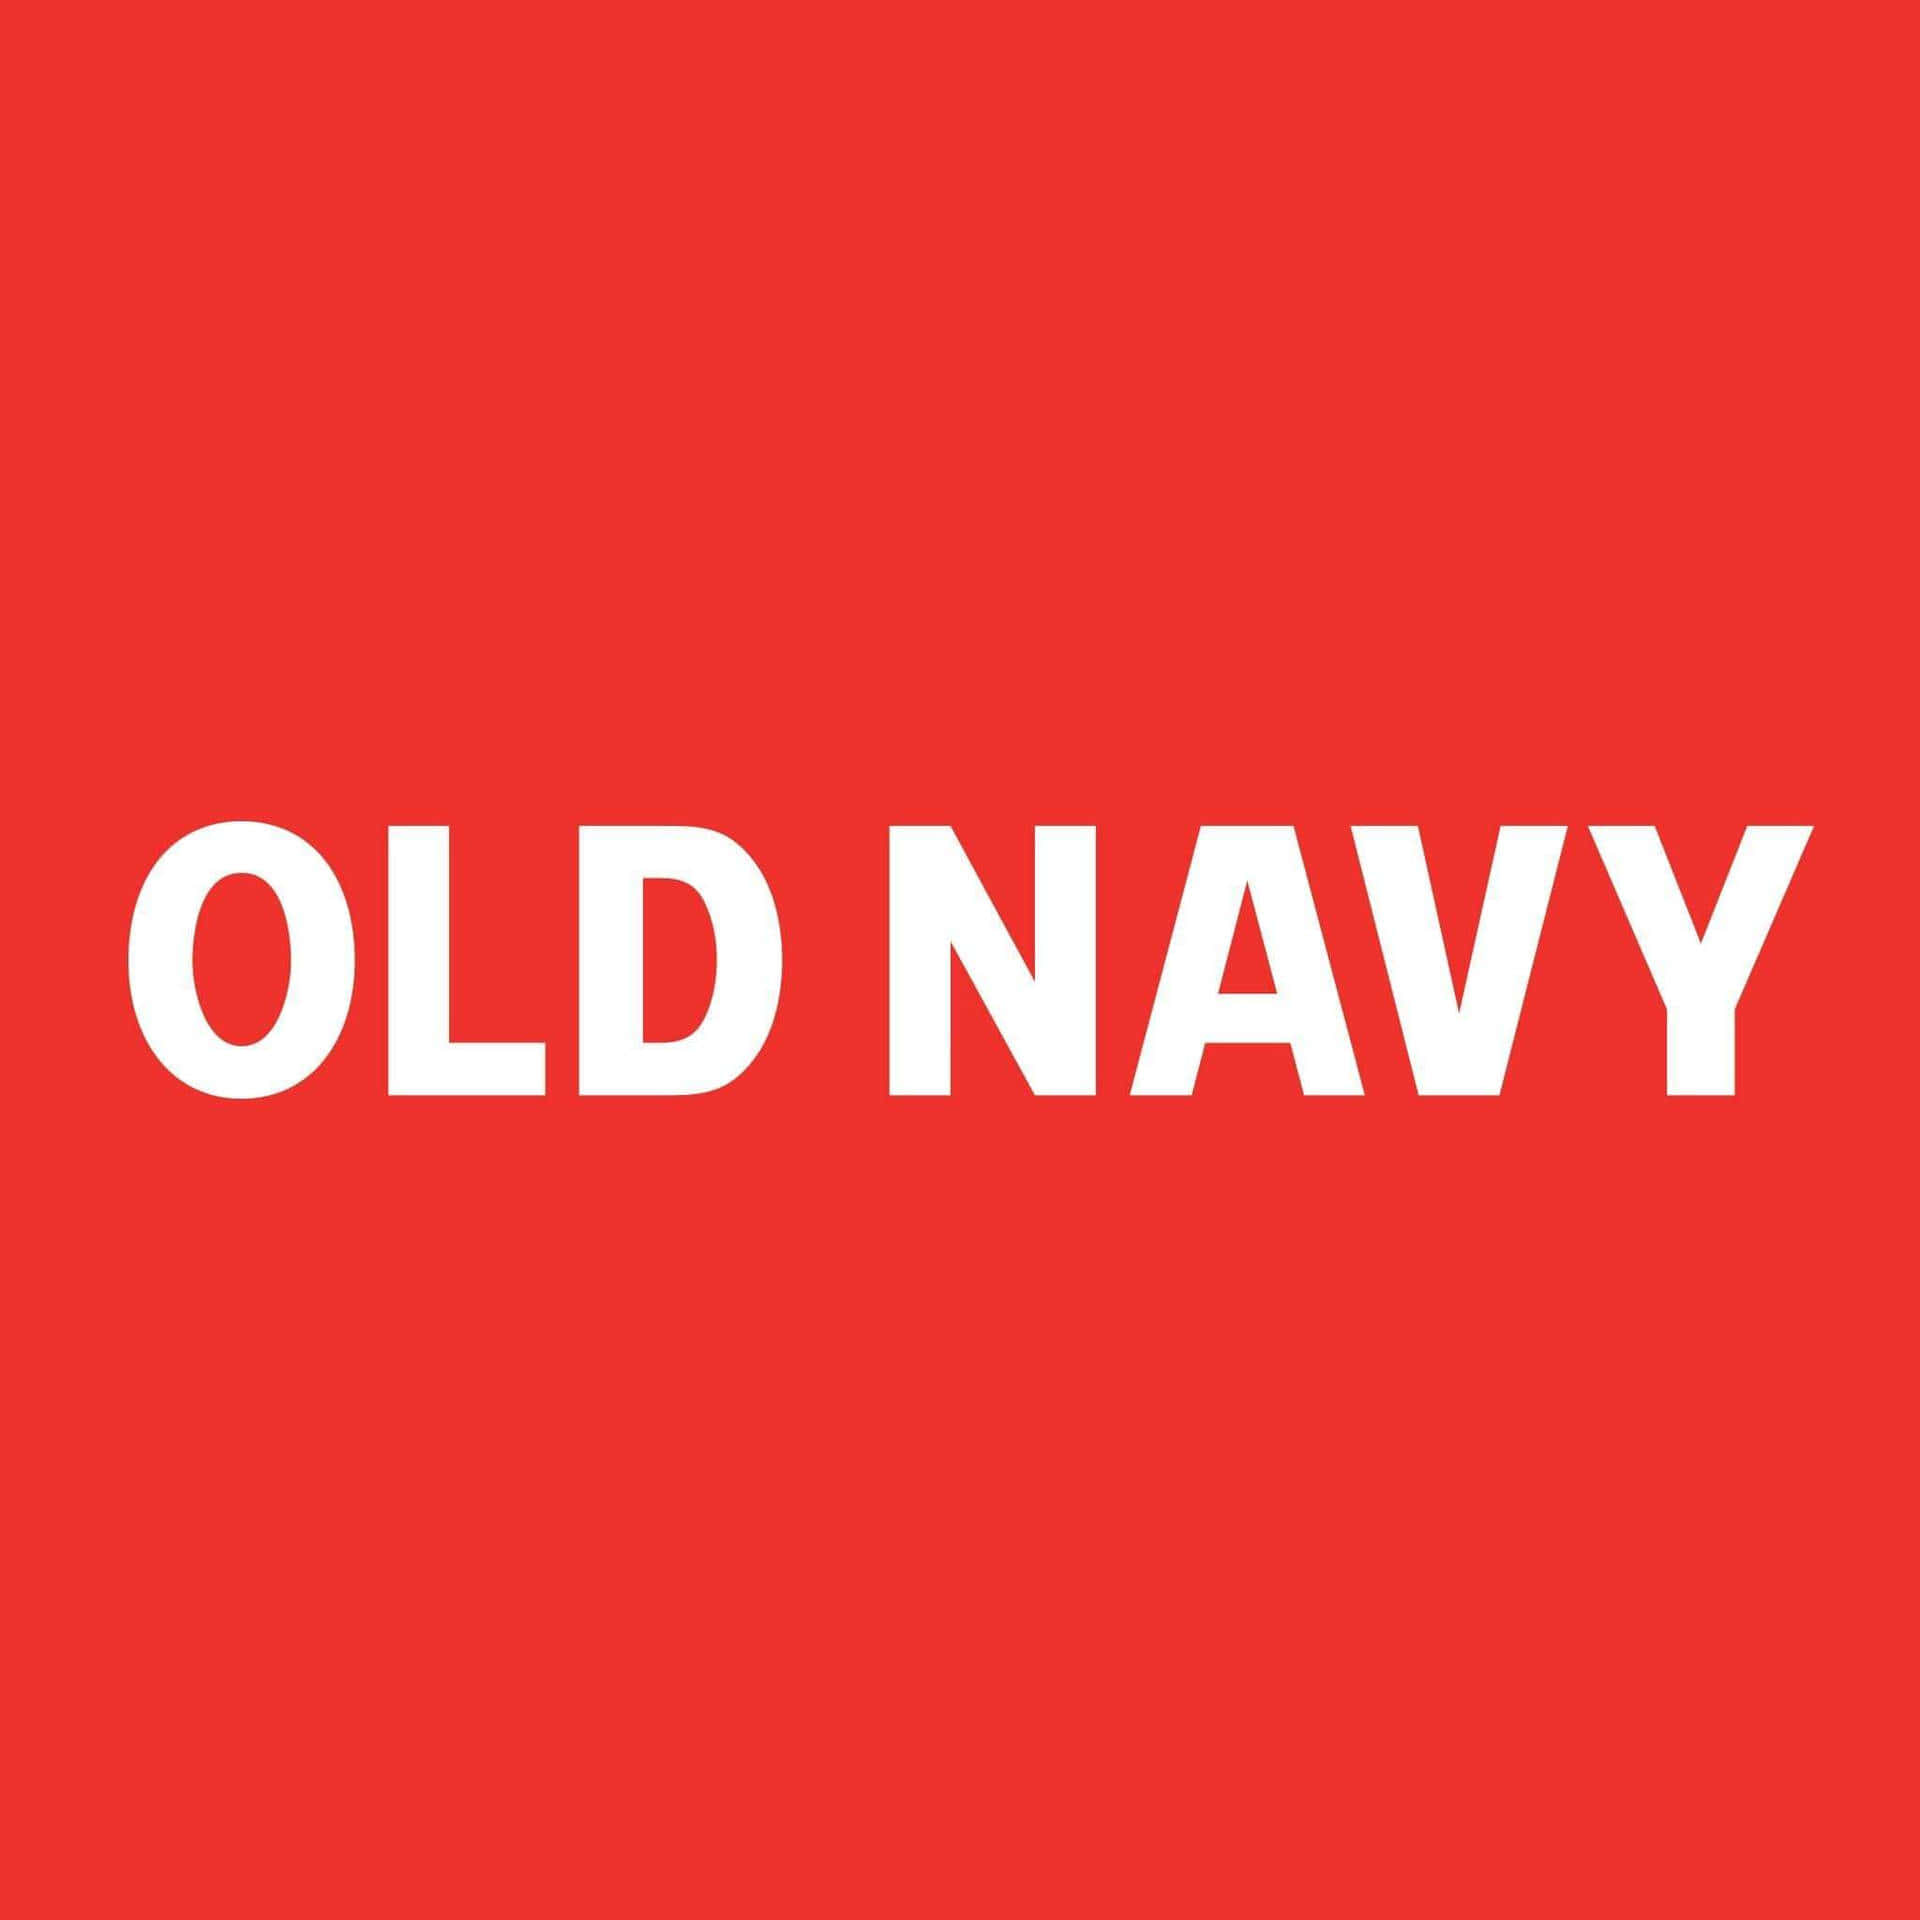 Sfondoold Navy